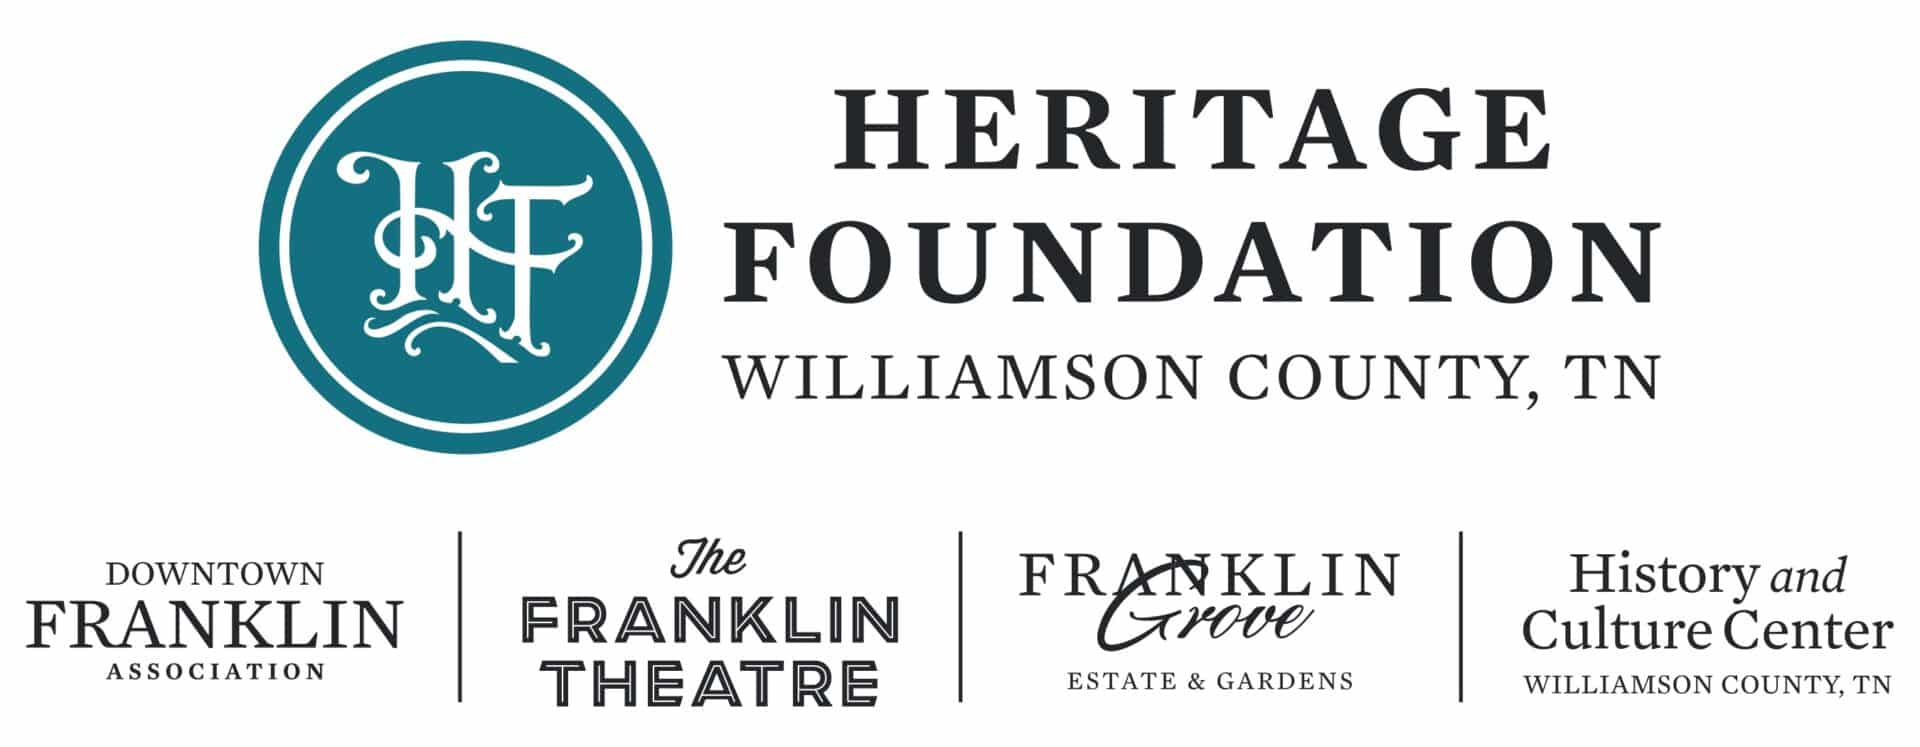 Heritage Foundation Williamson County, TN.